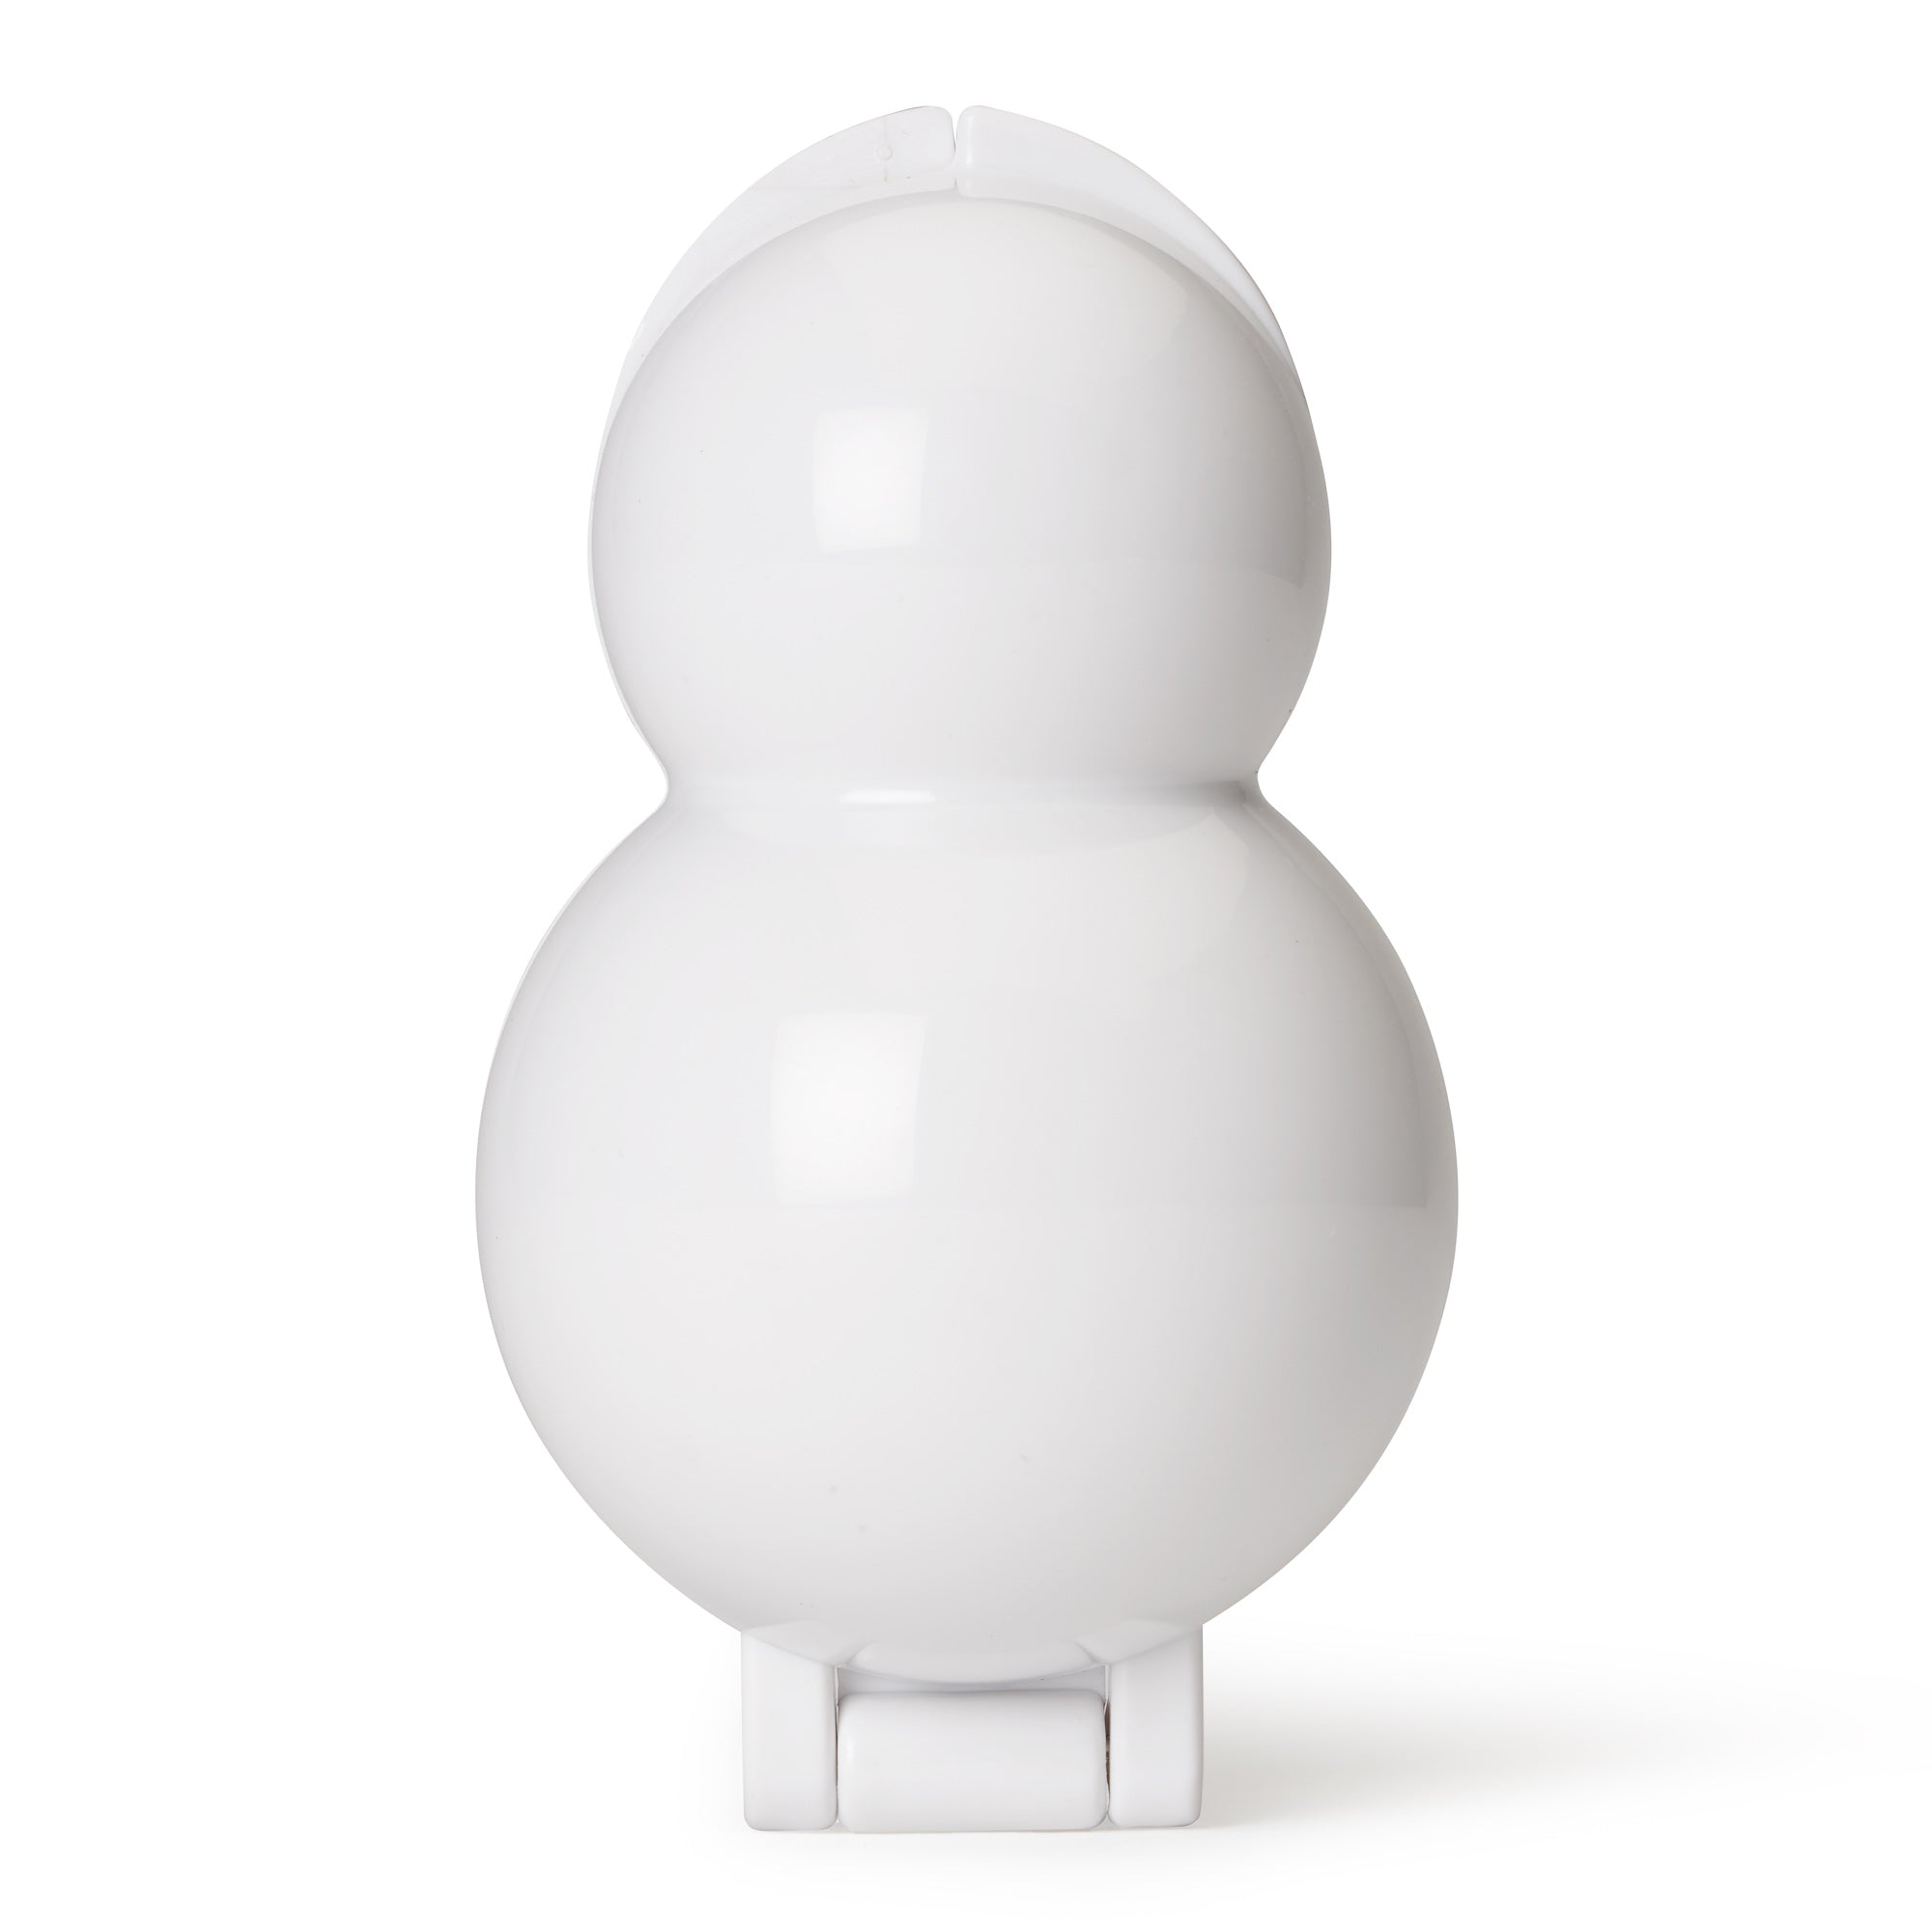 Kokubo Delijoy Snowman Popsicle Mold As Shown in Figure 2 Pcs